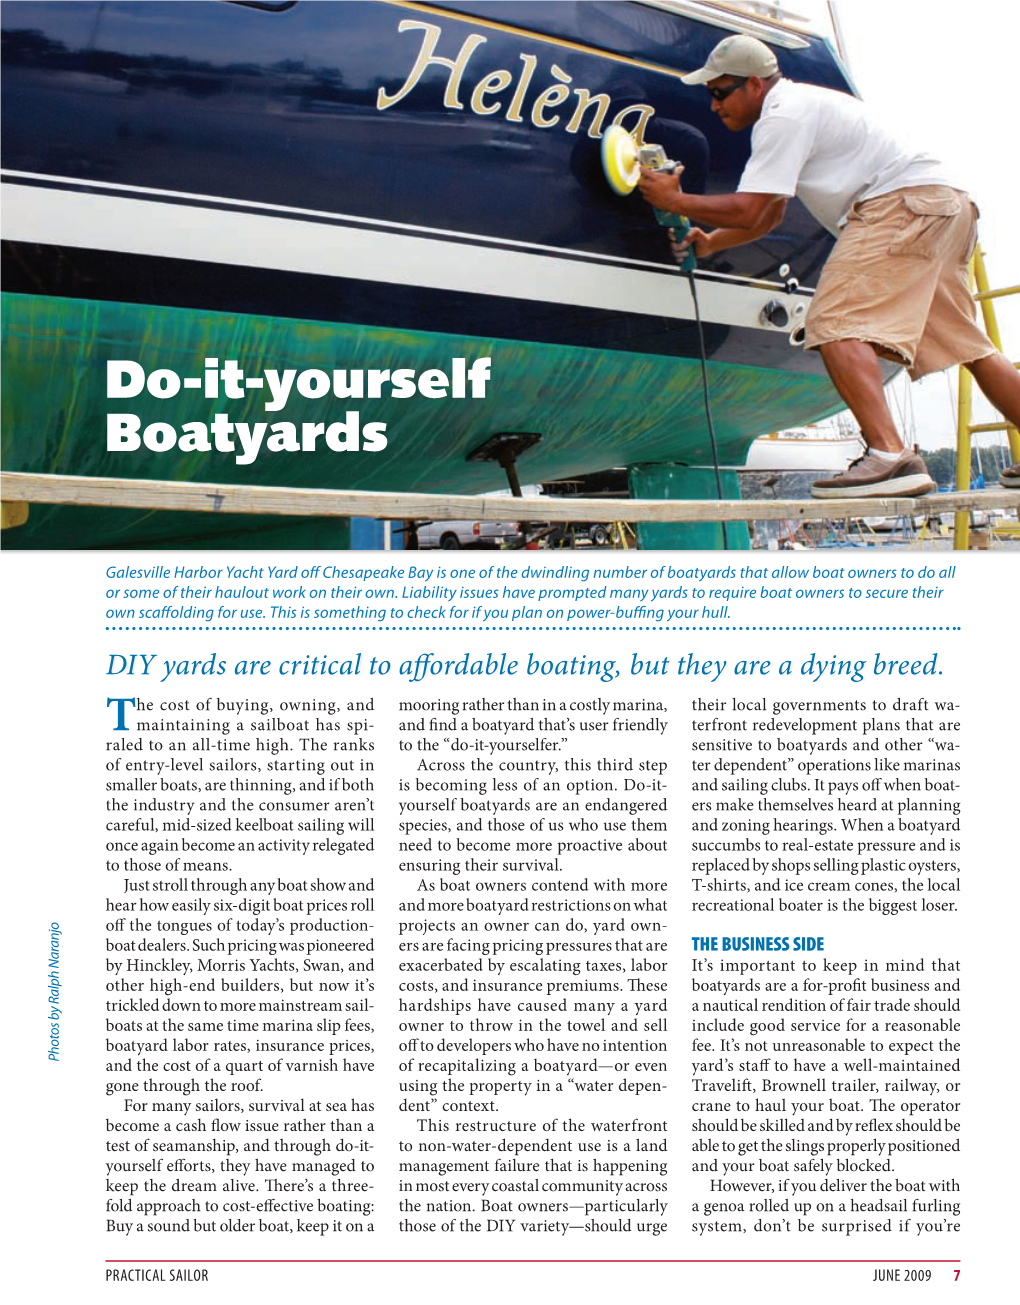 Do-It-Yourself Boatyards